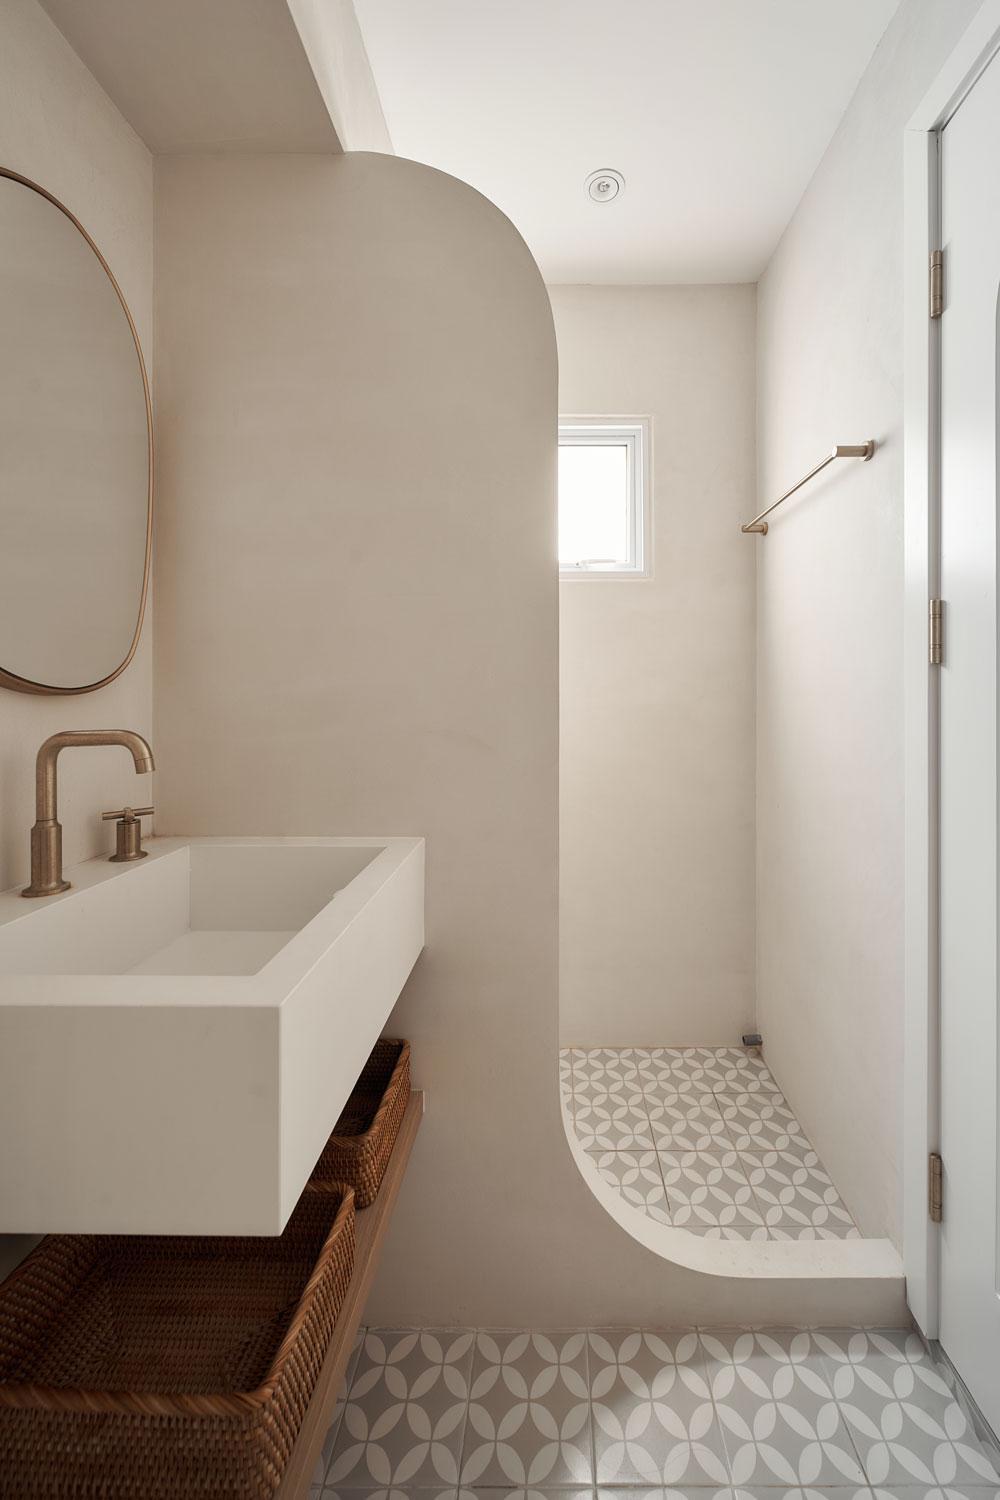 gxs flexiloan most beautiful home renovations - curved neutral bathroom